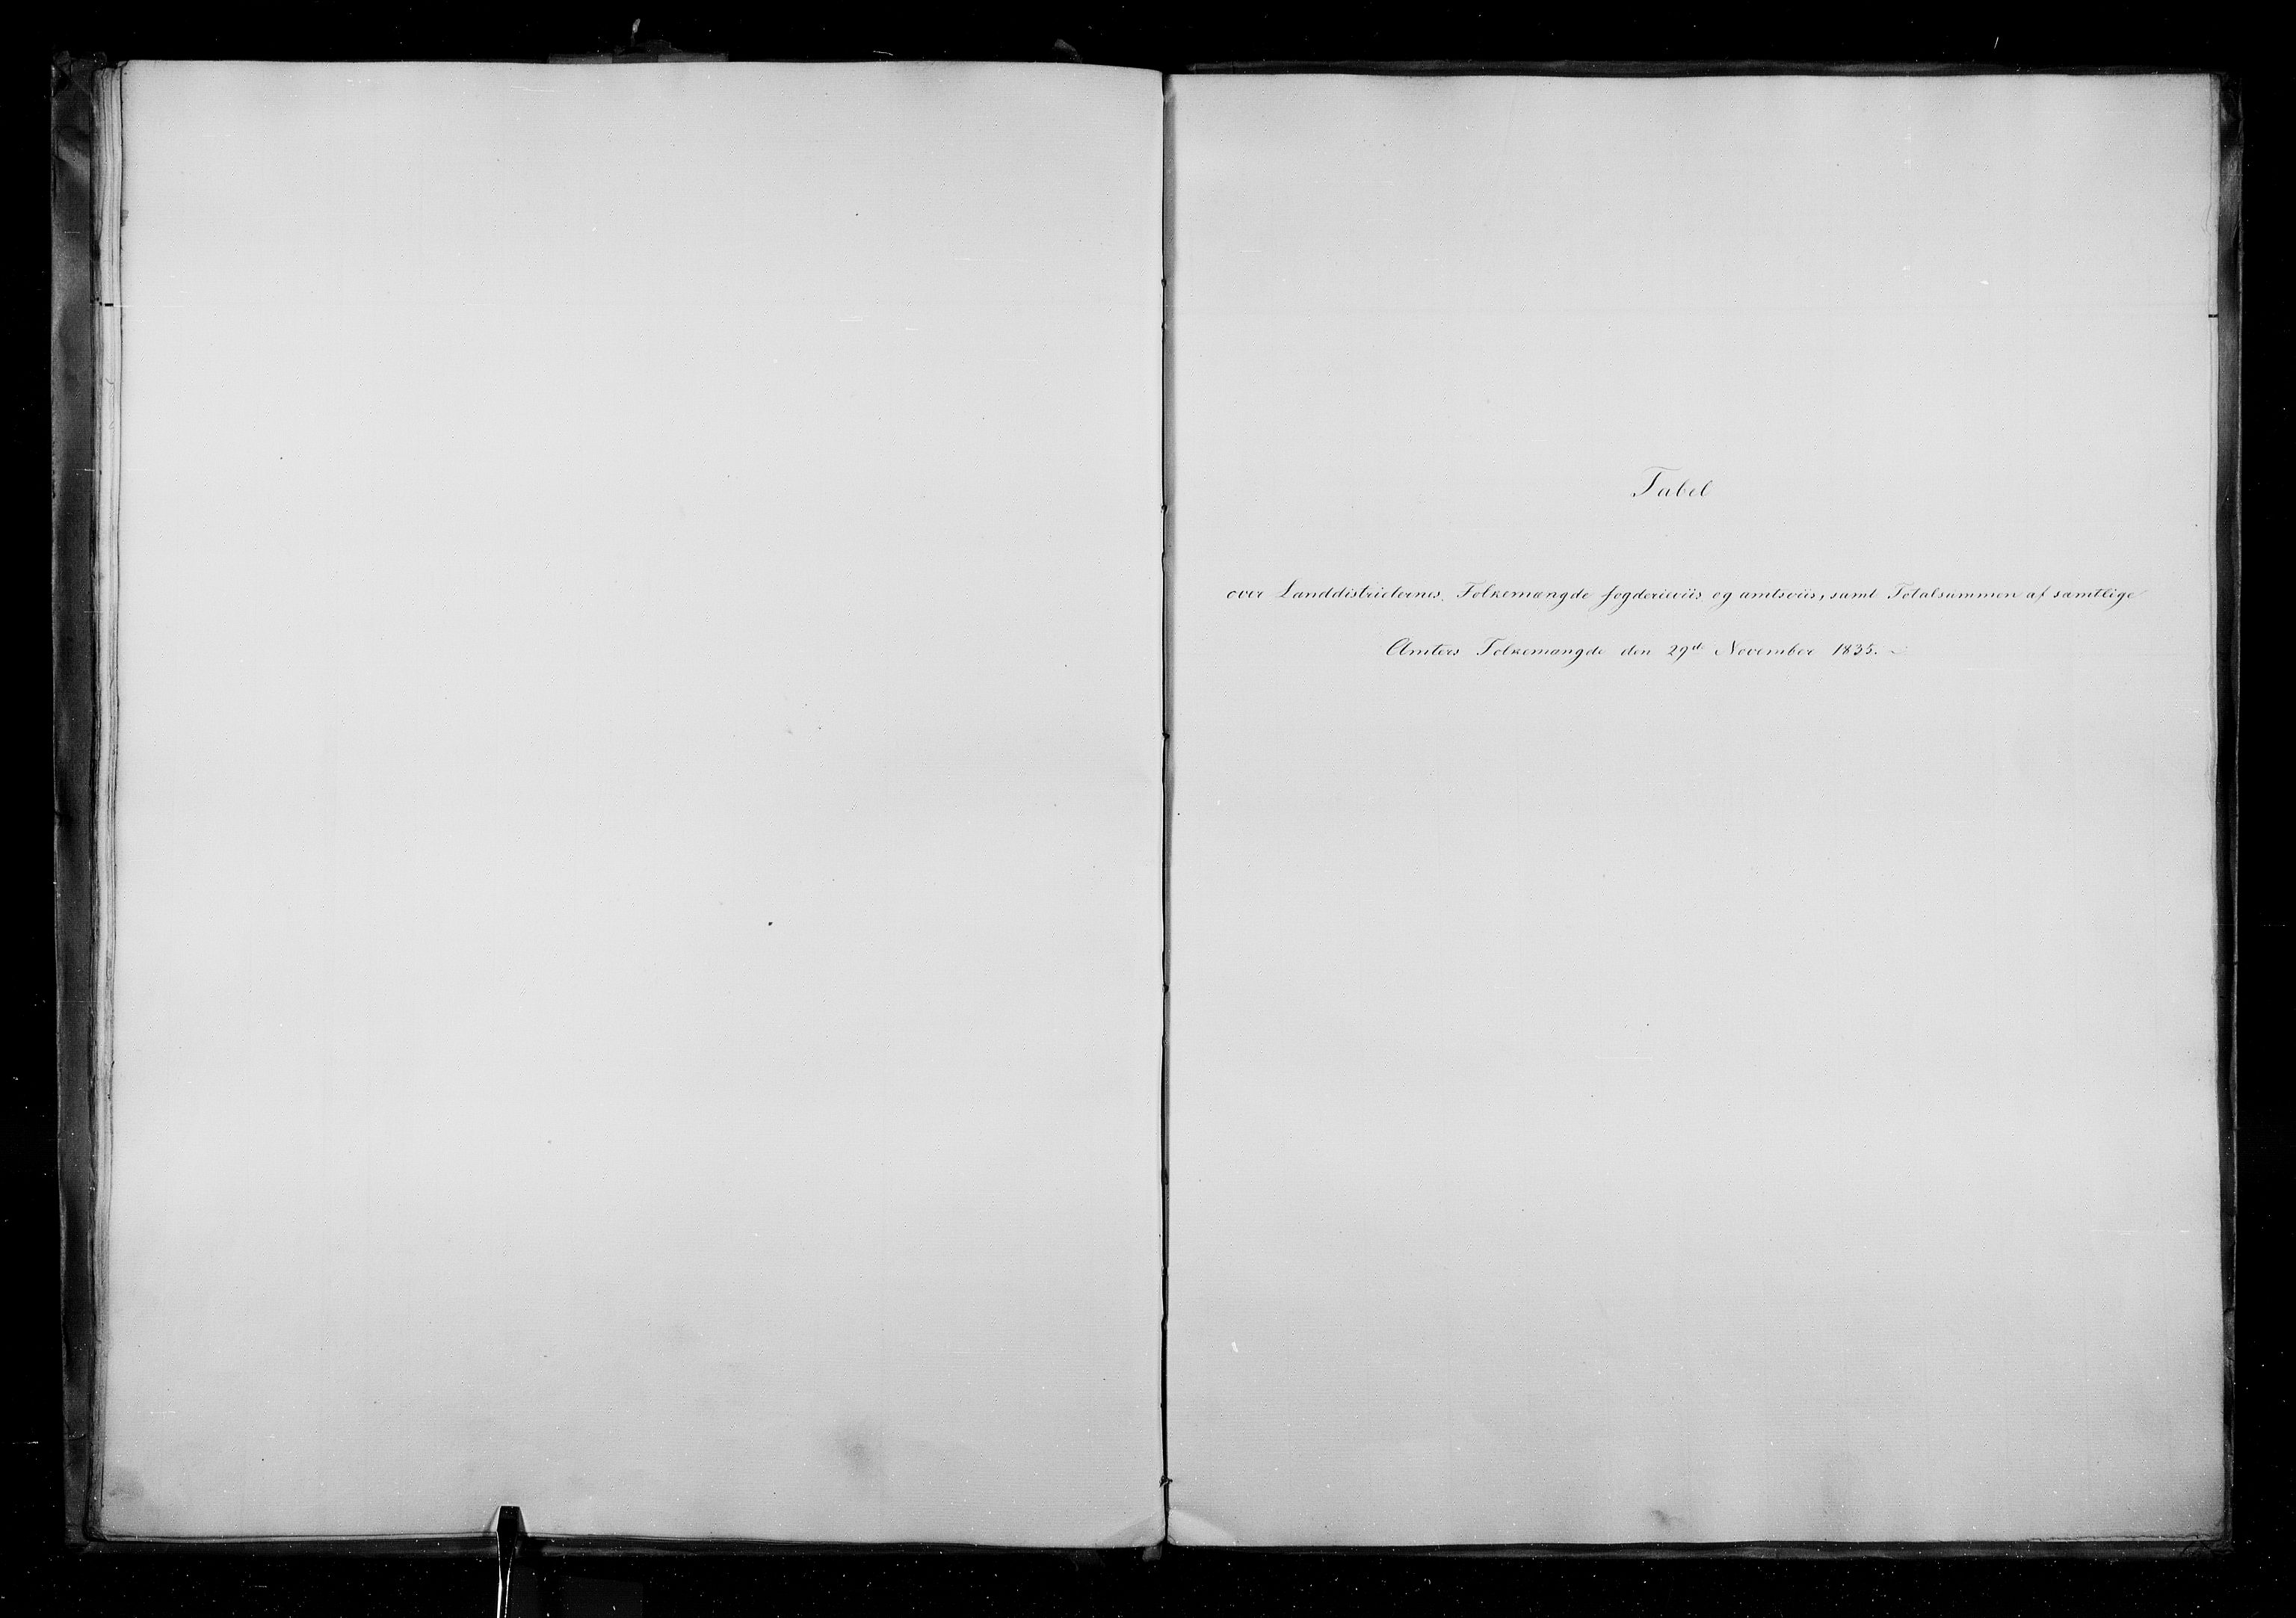 RA, Census 1835, vol. 1: Nationwide summaries, 1835